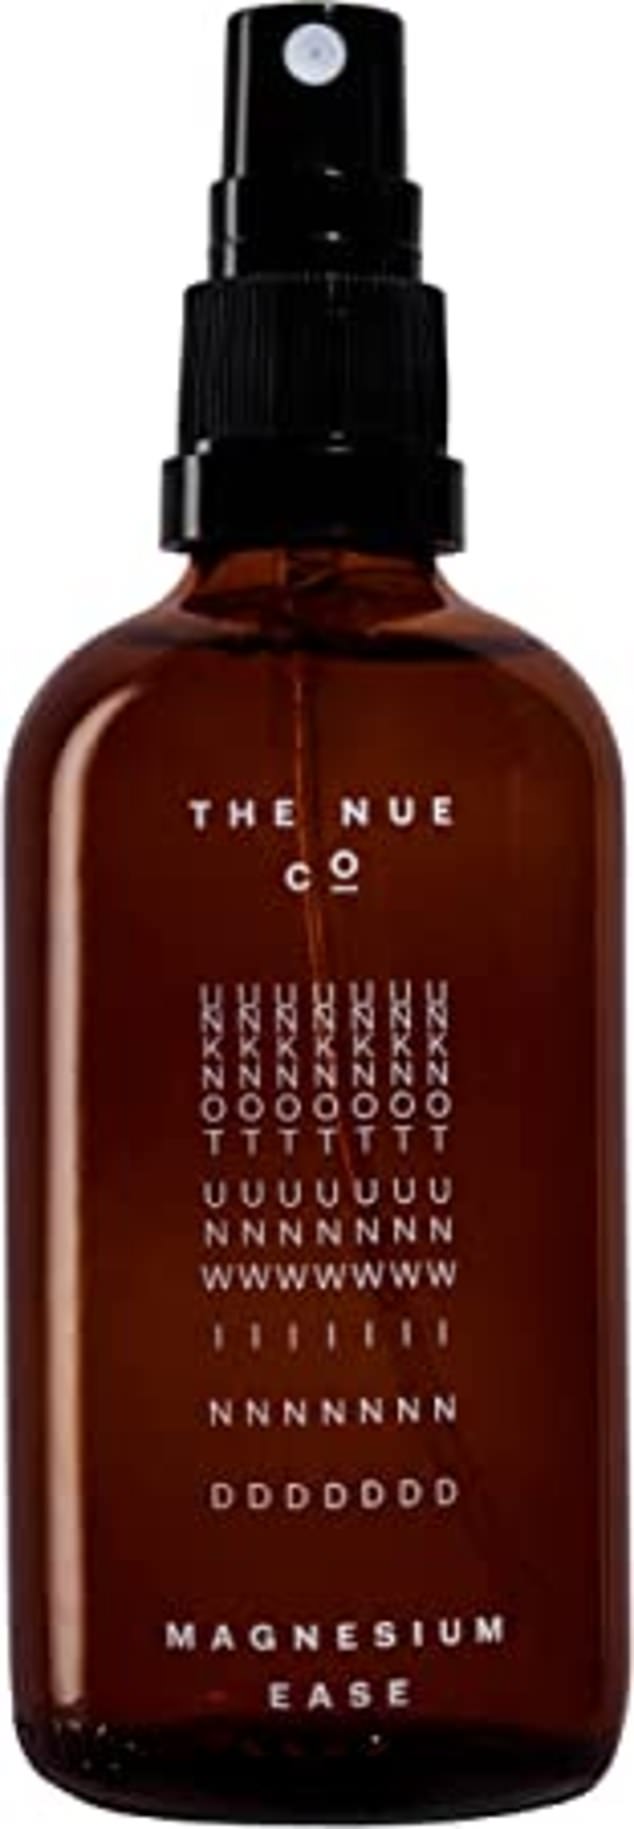 The Nue Co Magnesium Ease, £20, dannueco.com